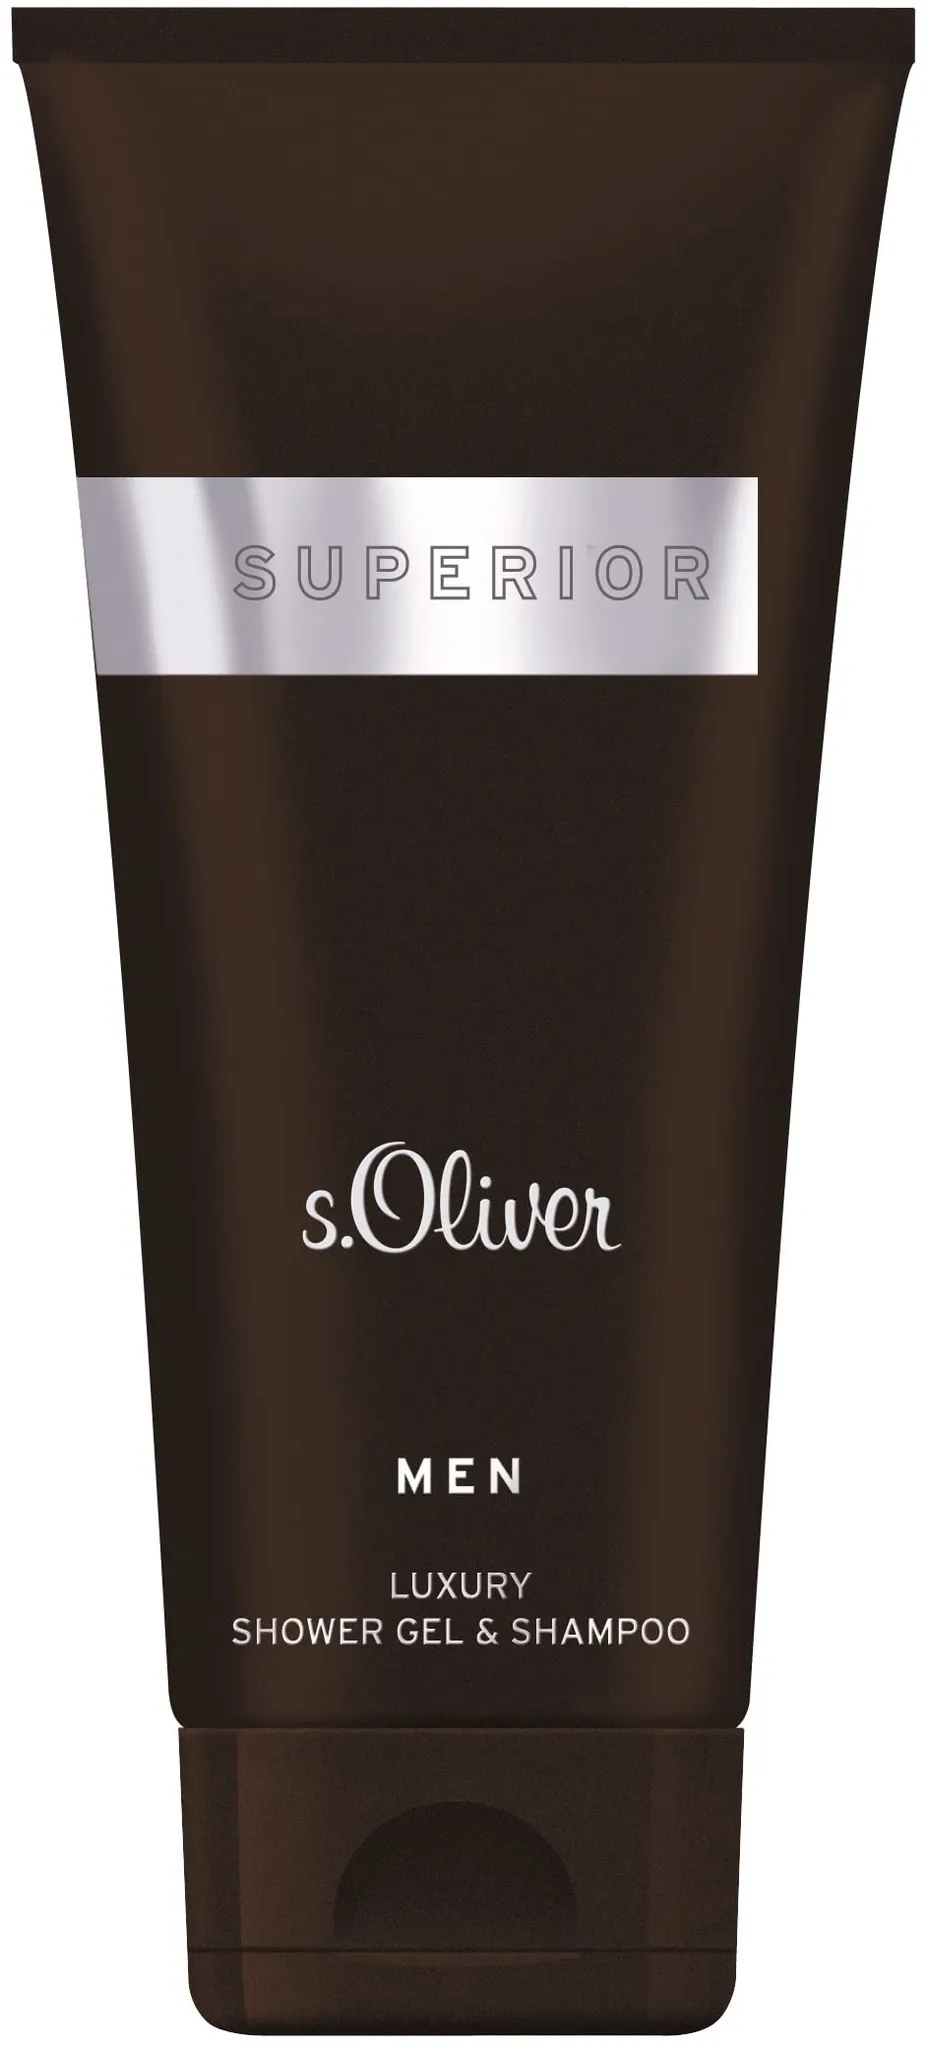 S.Oliver Superiour Men homme/men, Duschgel, 1er Pack (1 x 200 g)